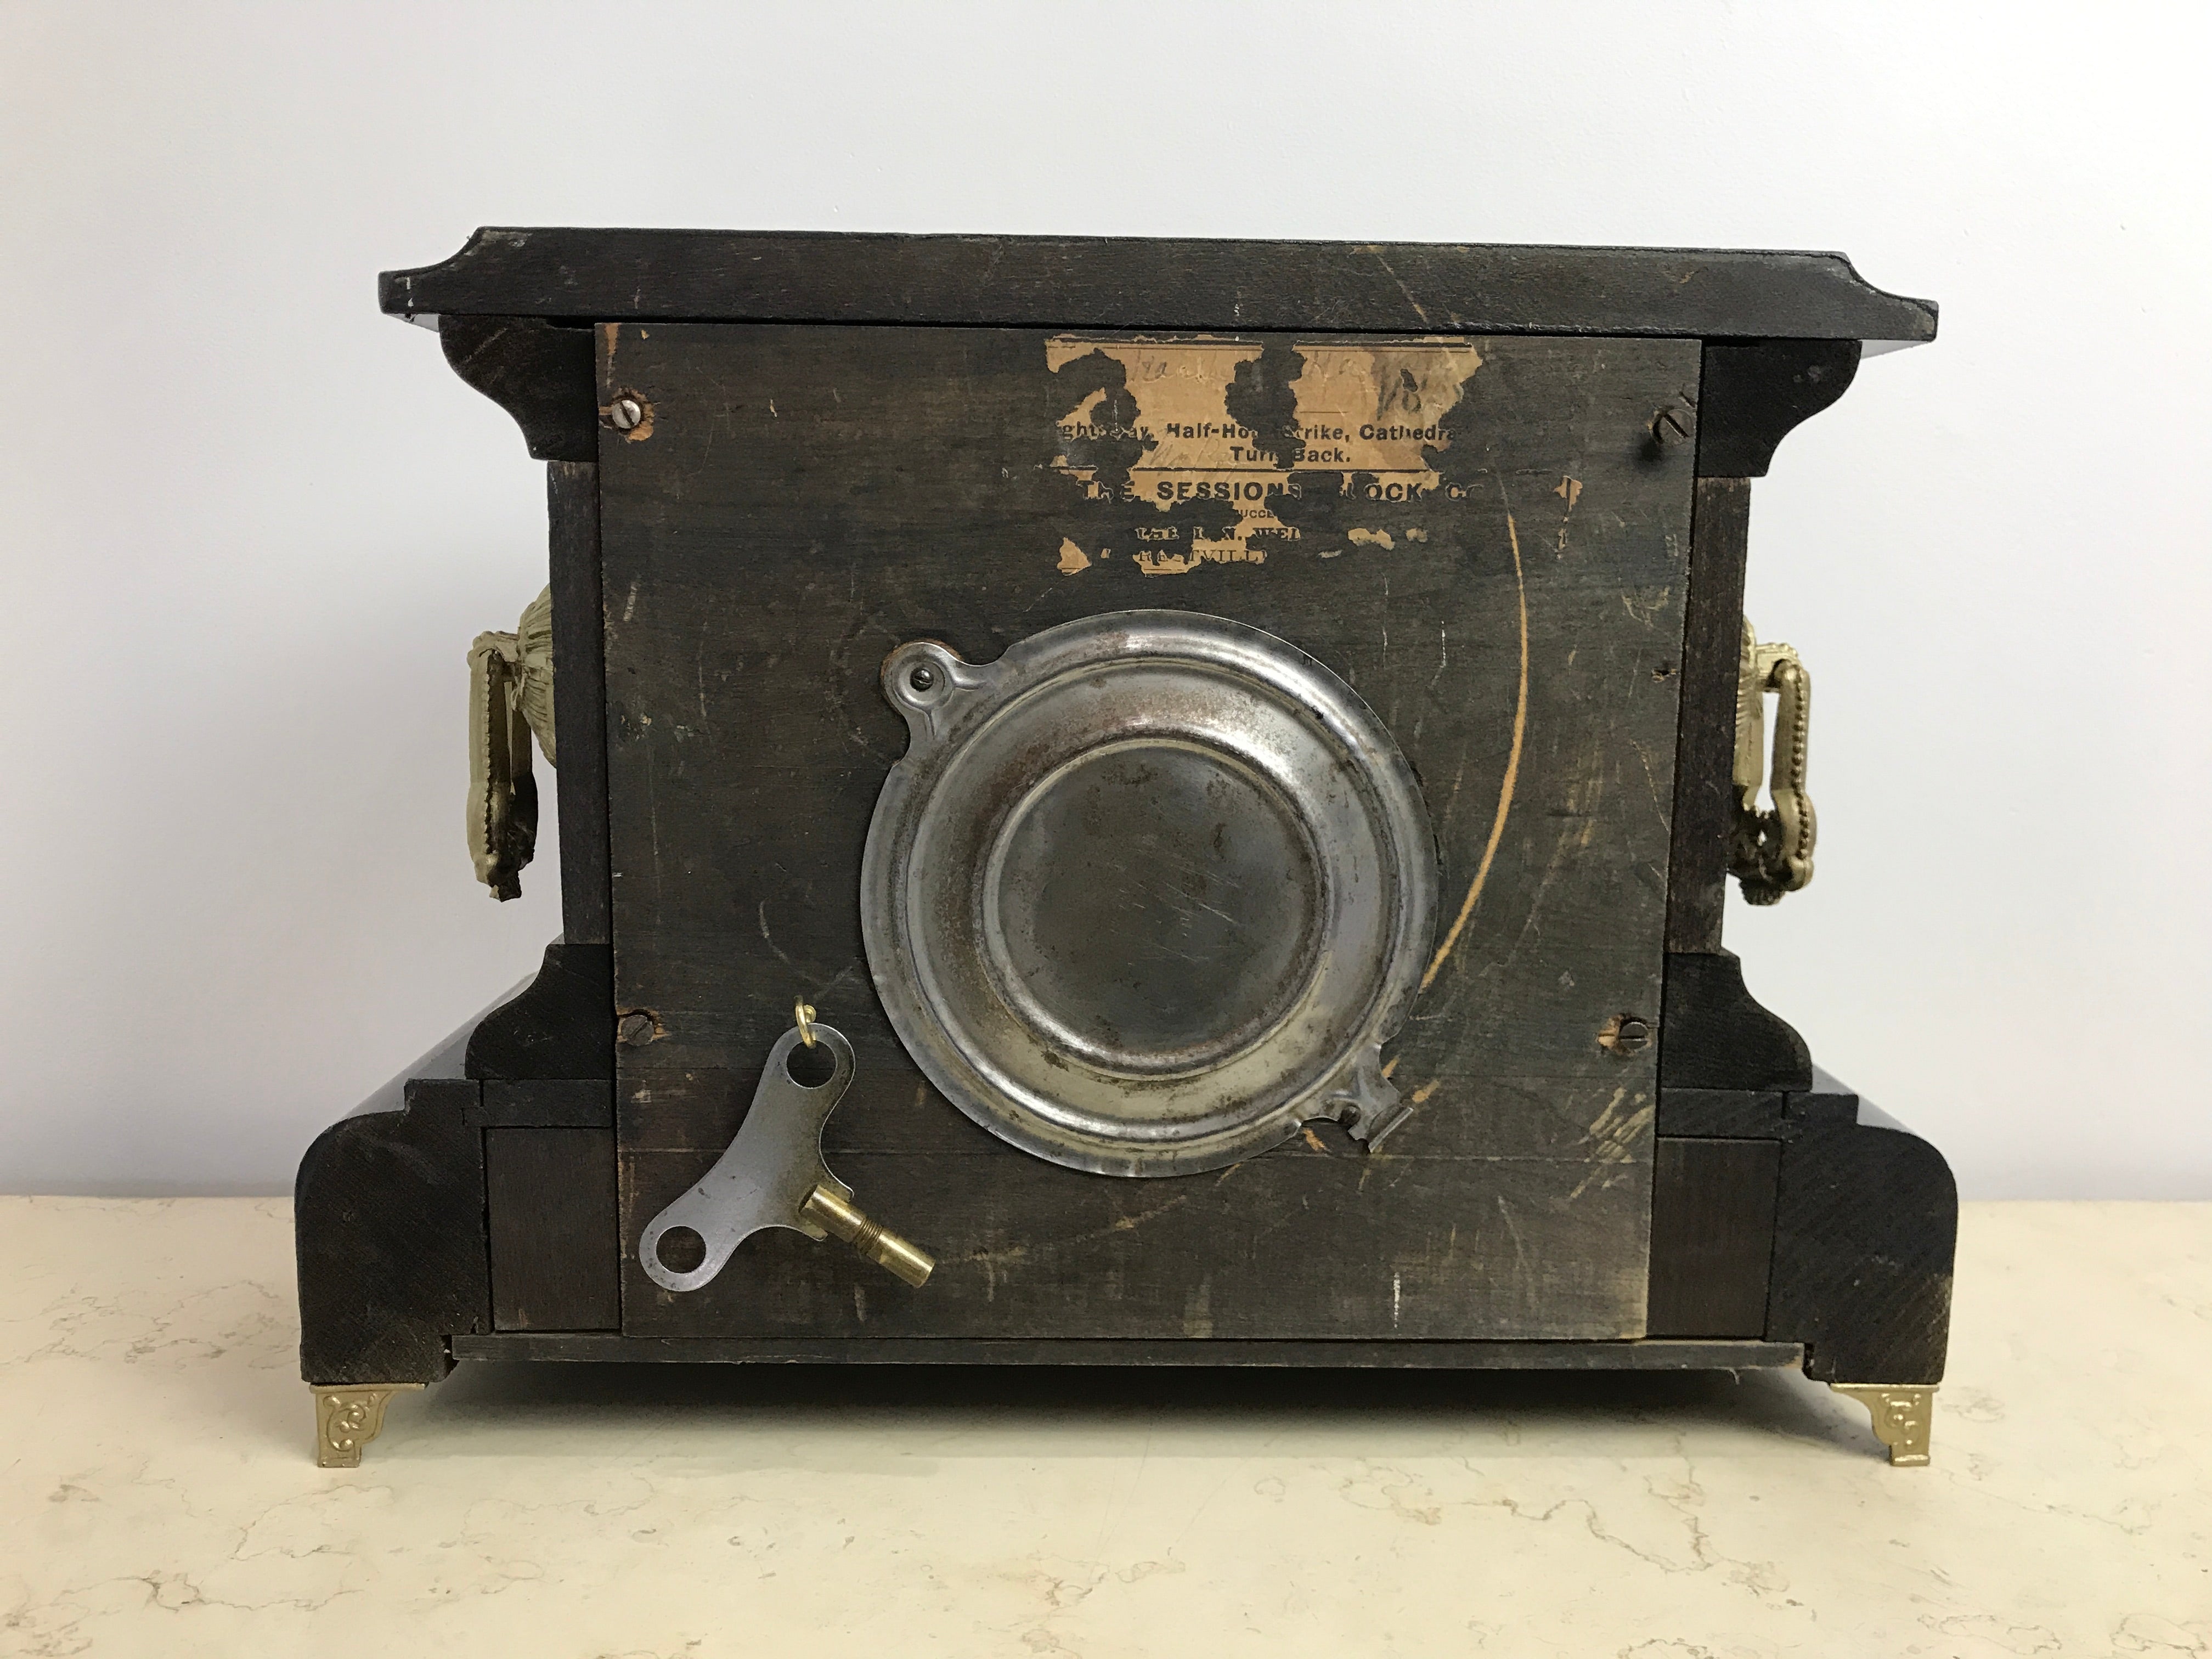 Antique Sessions Chime Mantel Clock | eXibit collection